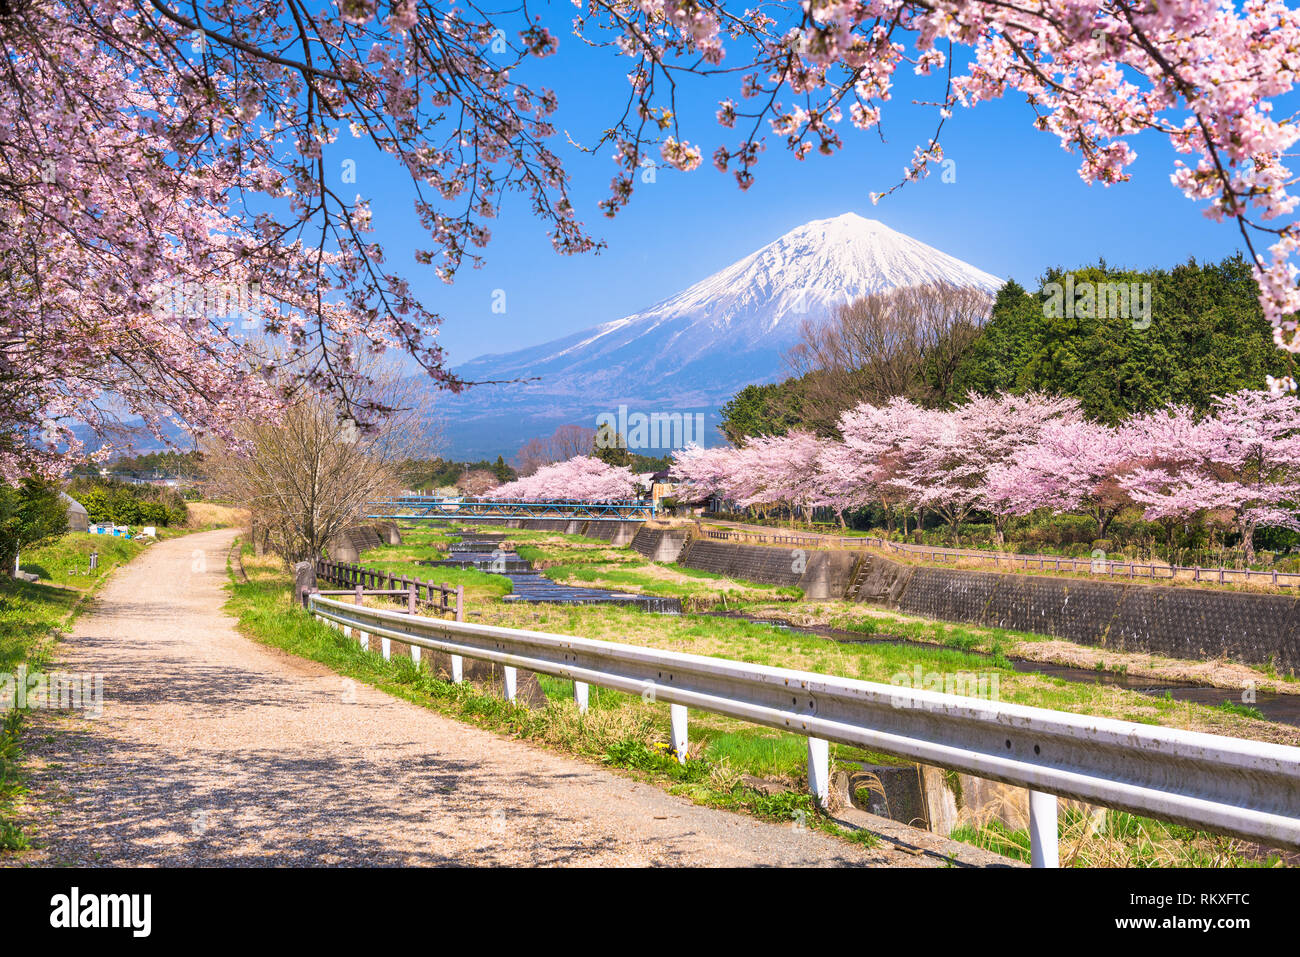 Mt. Fuji viewed from rural Shizuoka Prefecture in spring season. Stock Photo